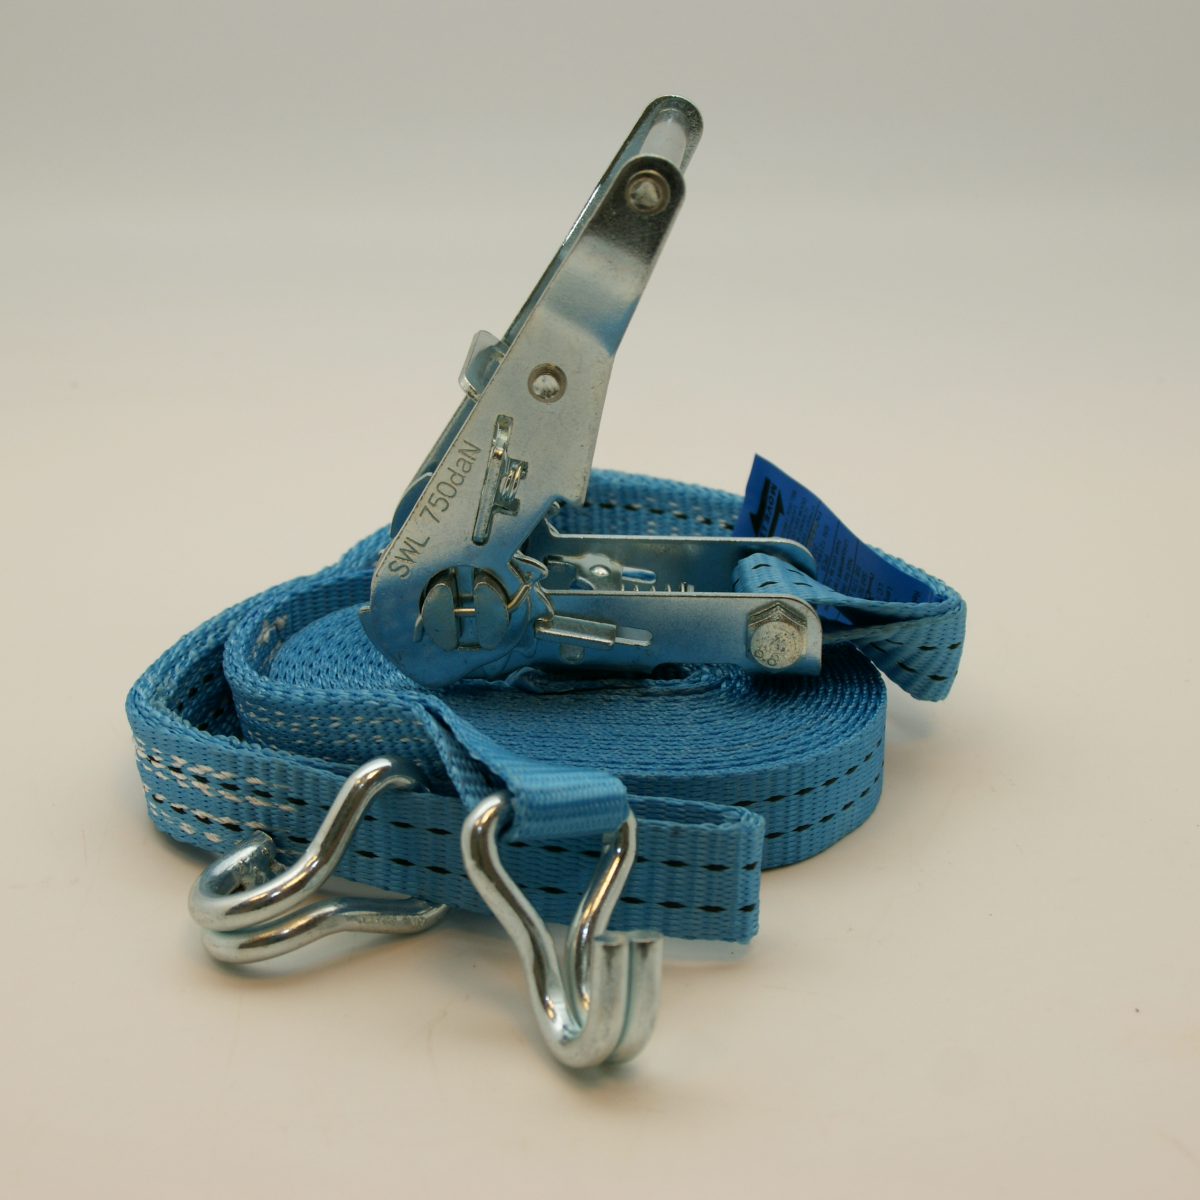 Sjorband: Spanband smalle haak blauw, 25mm 750daN 8m